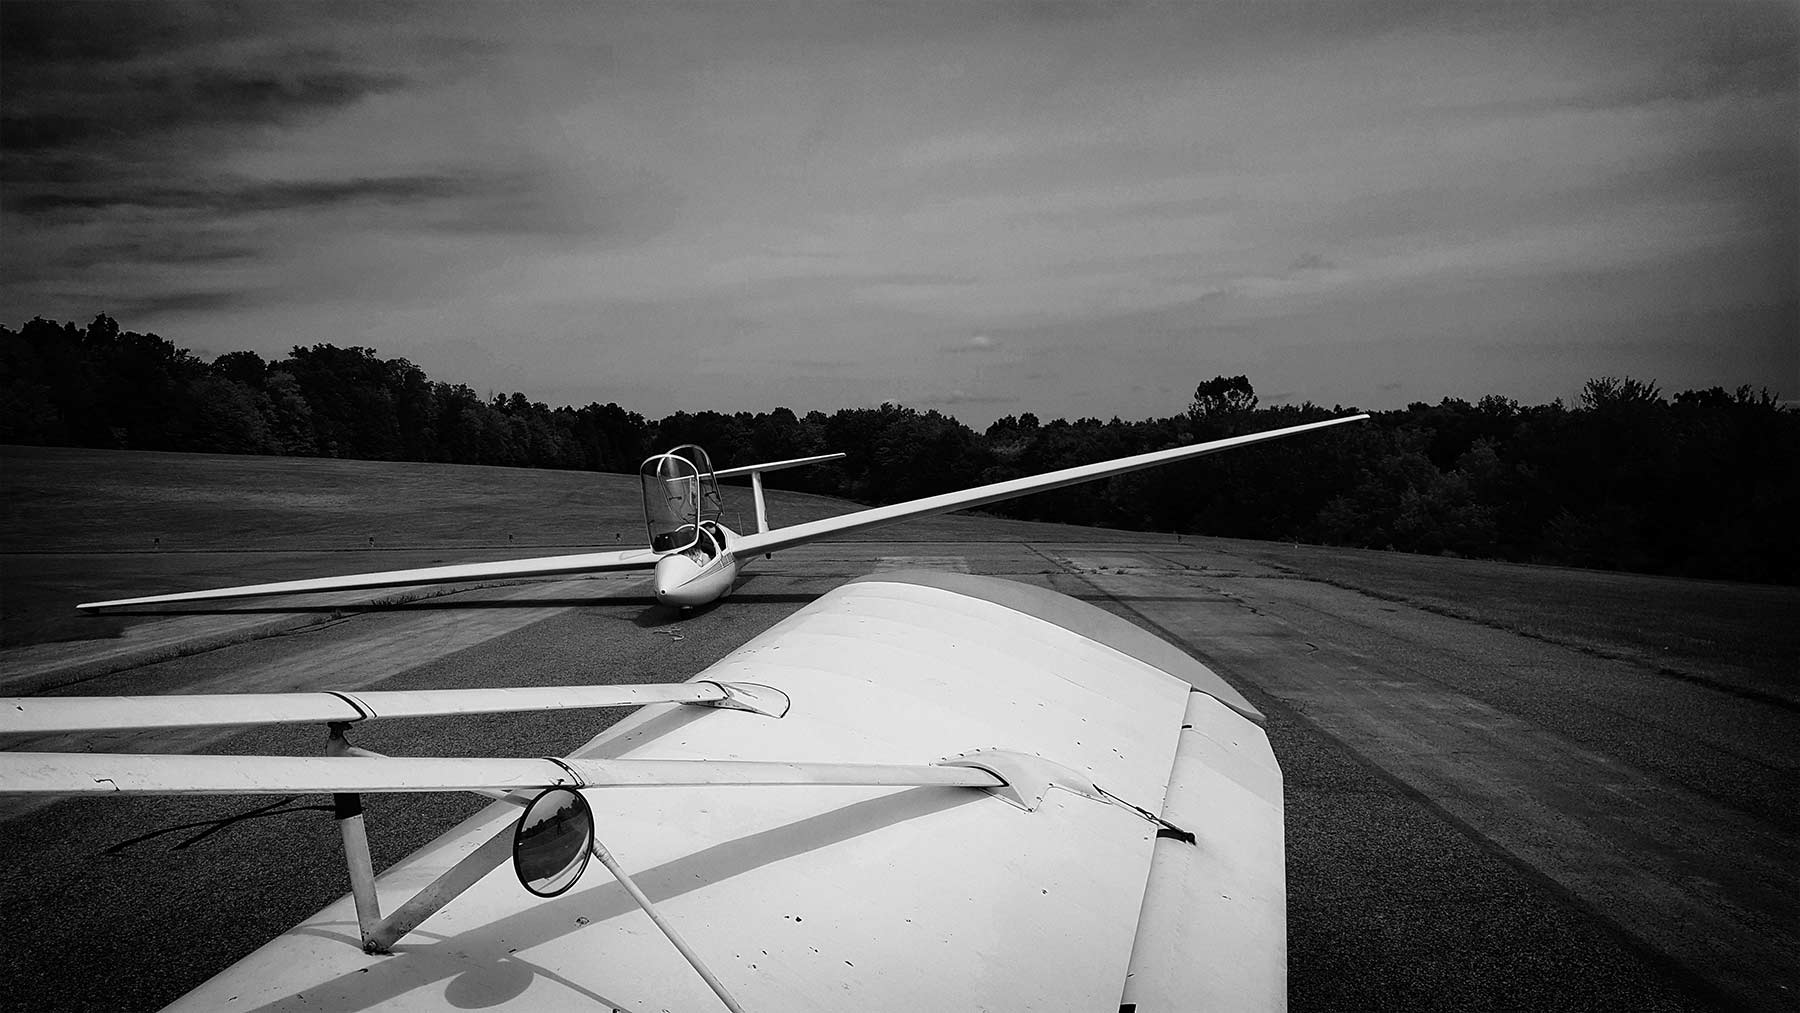 towing glider ©2016 bret wills